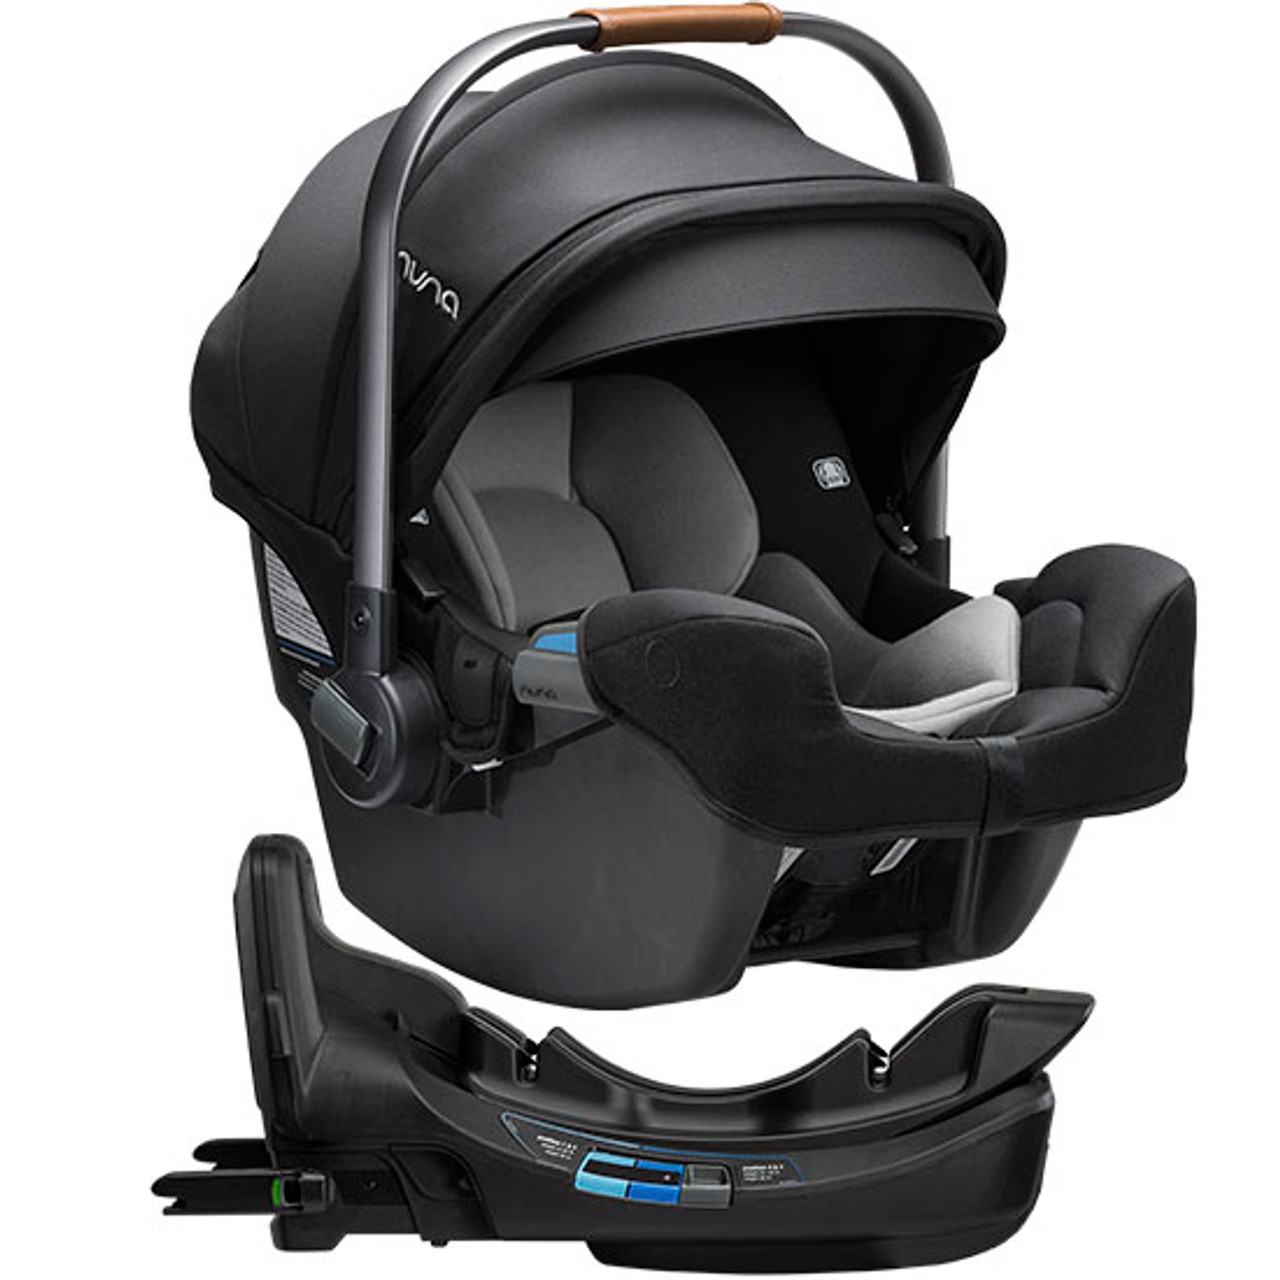 2019 nuna pipa infant car seat and base